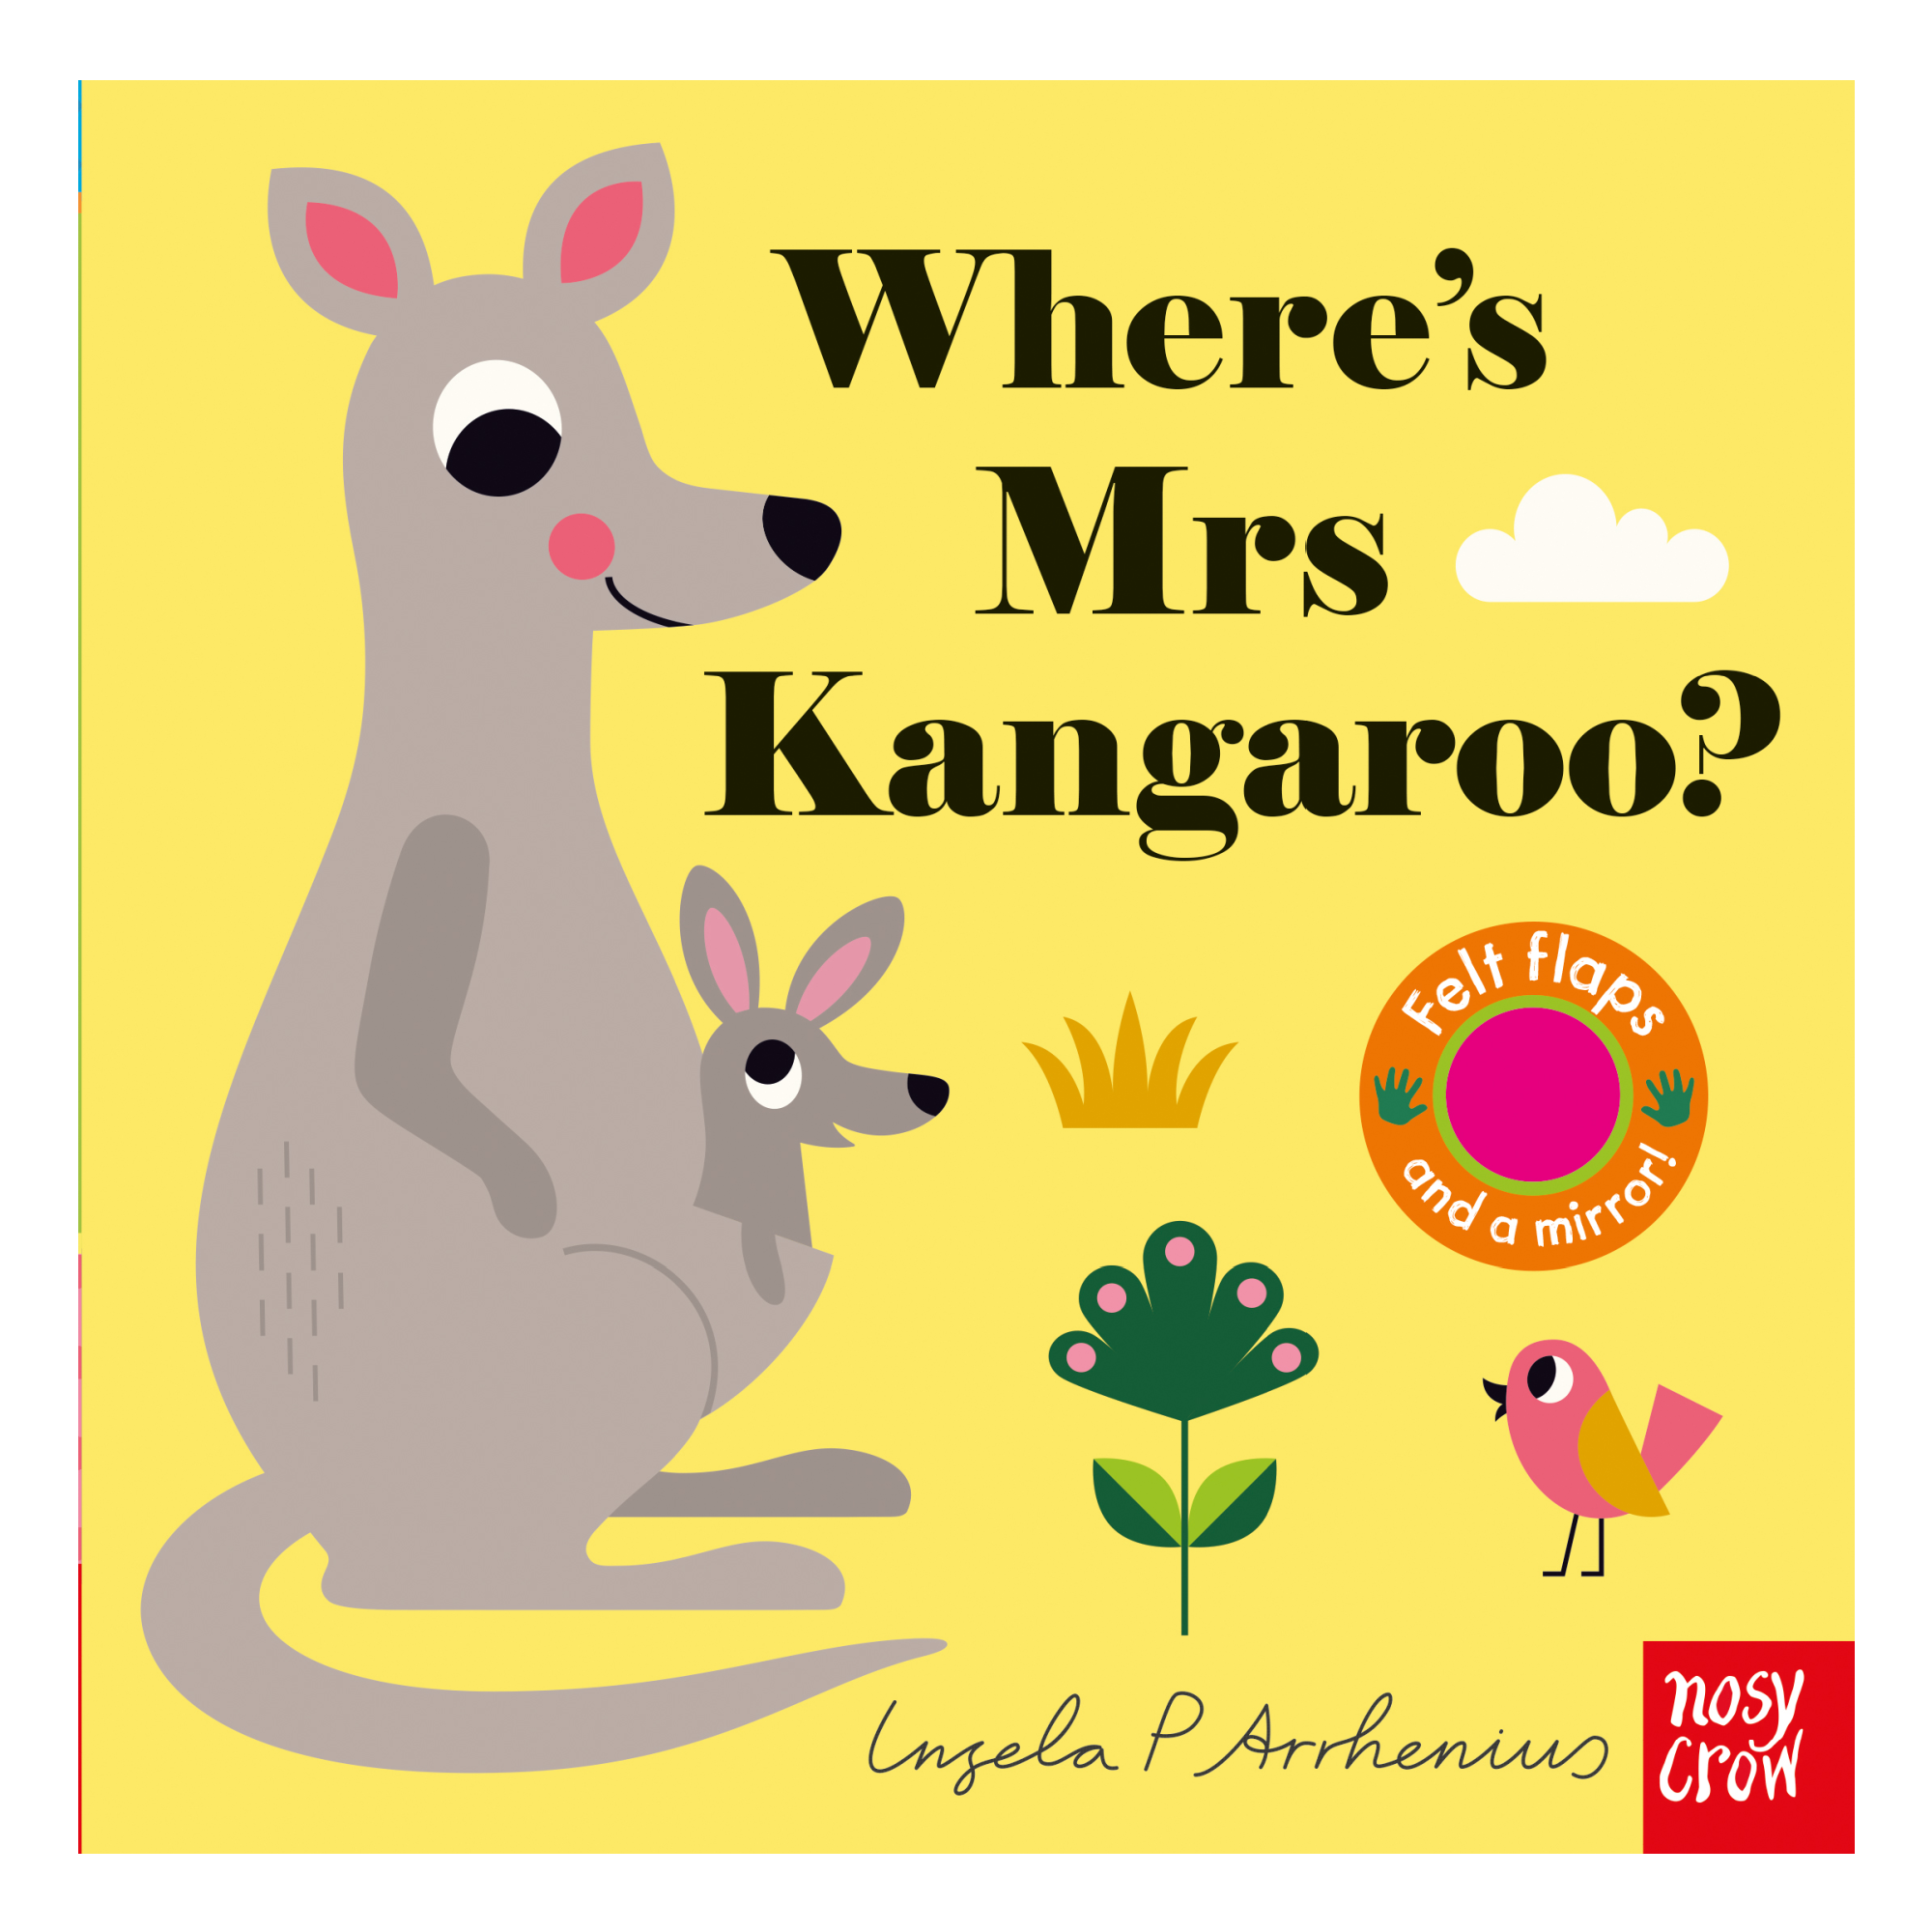 Where's Mrs Kangaroo?